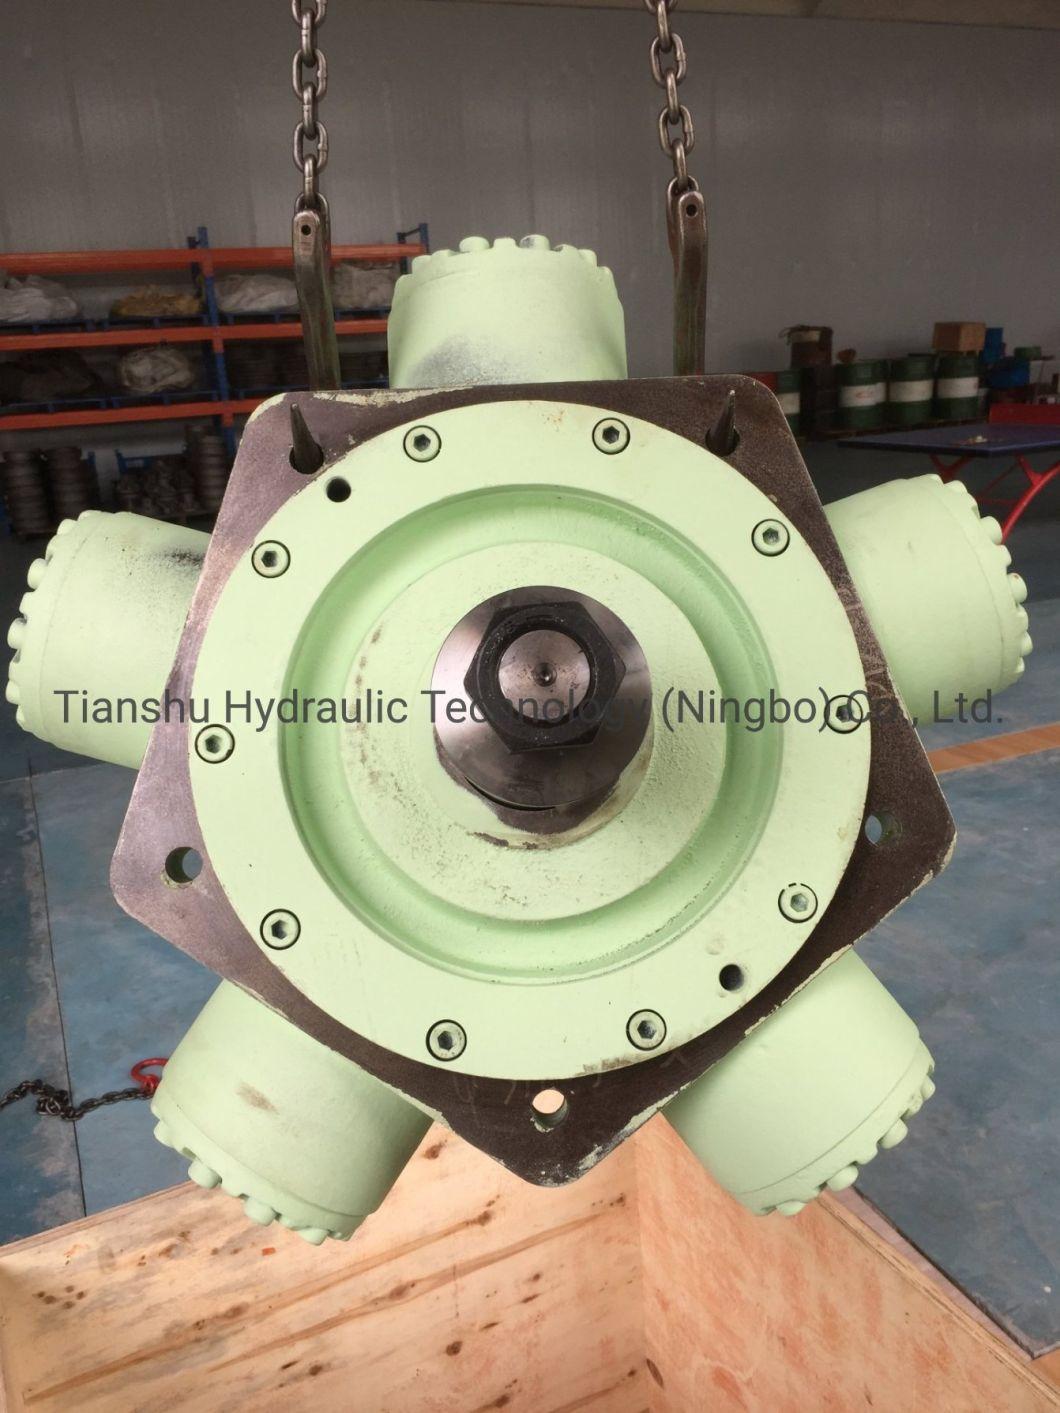 Tianshu Produce High Quality Staffa Radial Piston Kawasaki Hydraulic Motor for Injection Moulding Machine